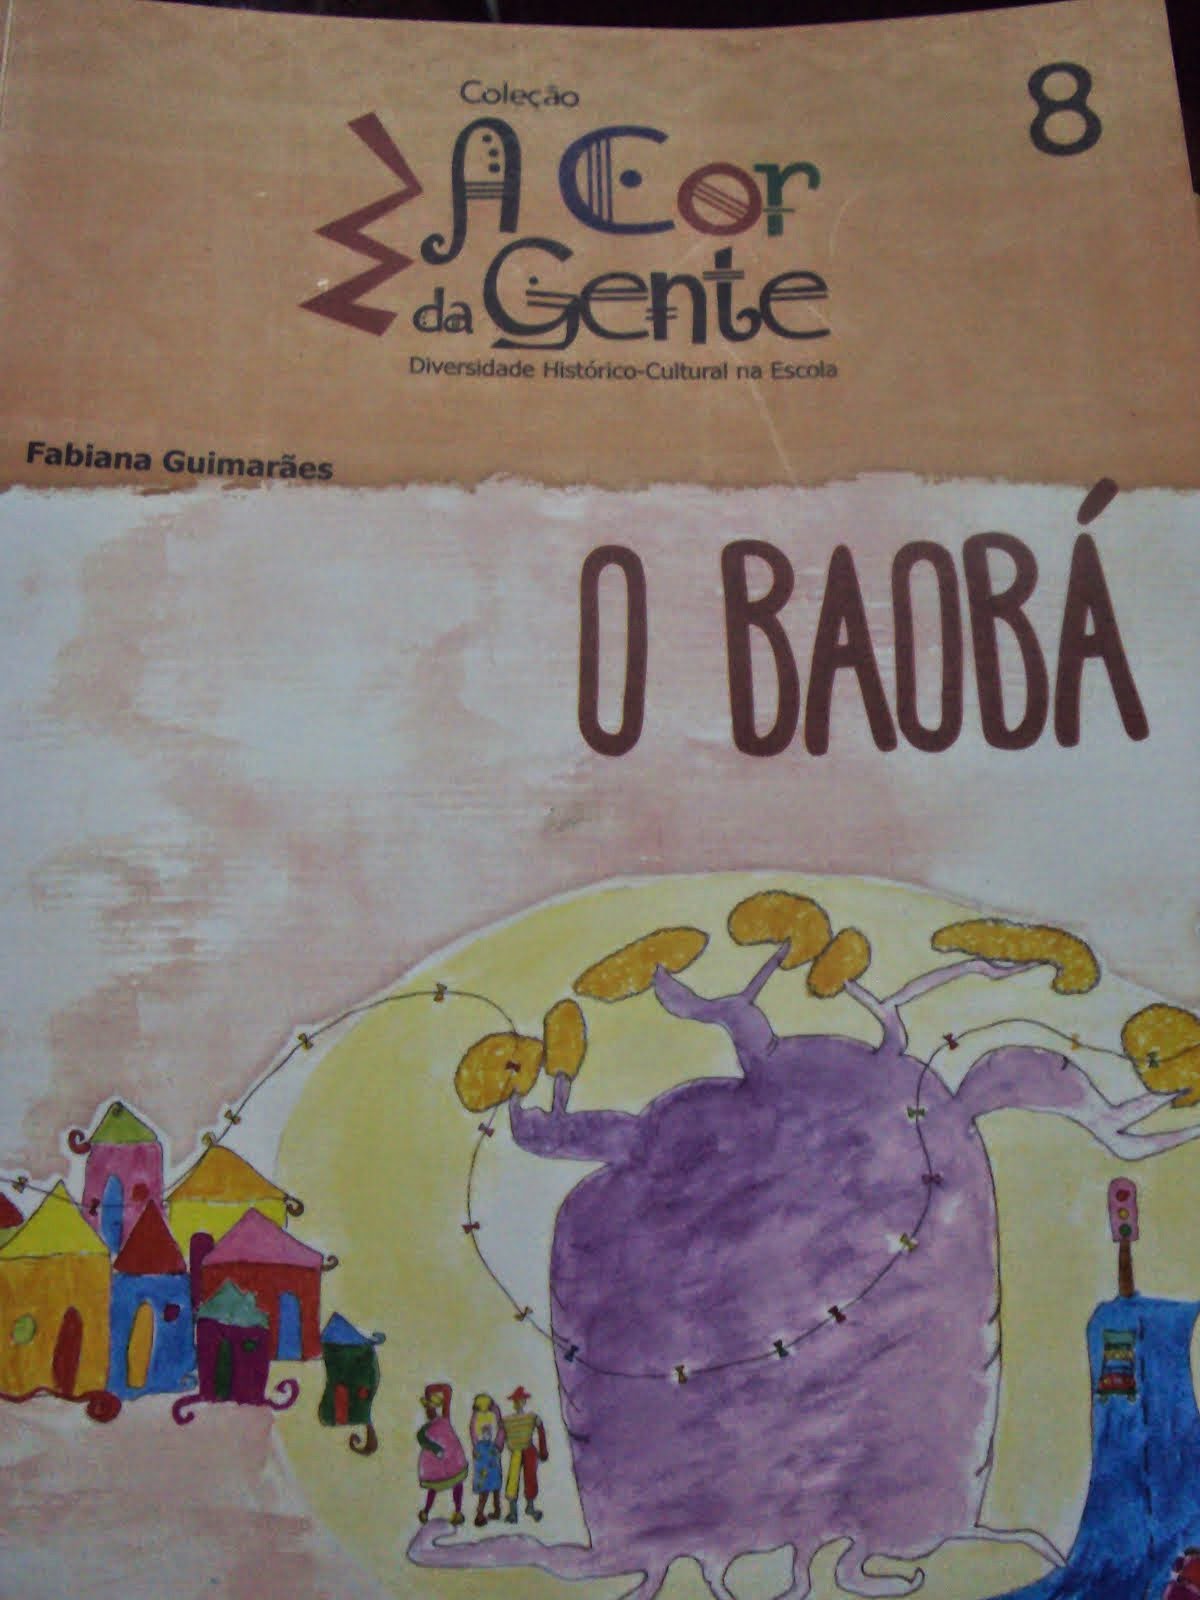 o baobá